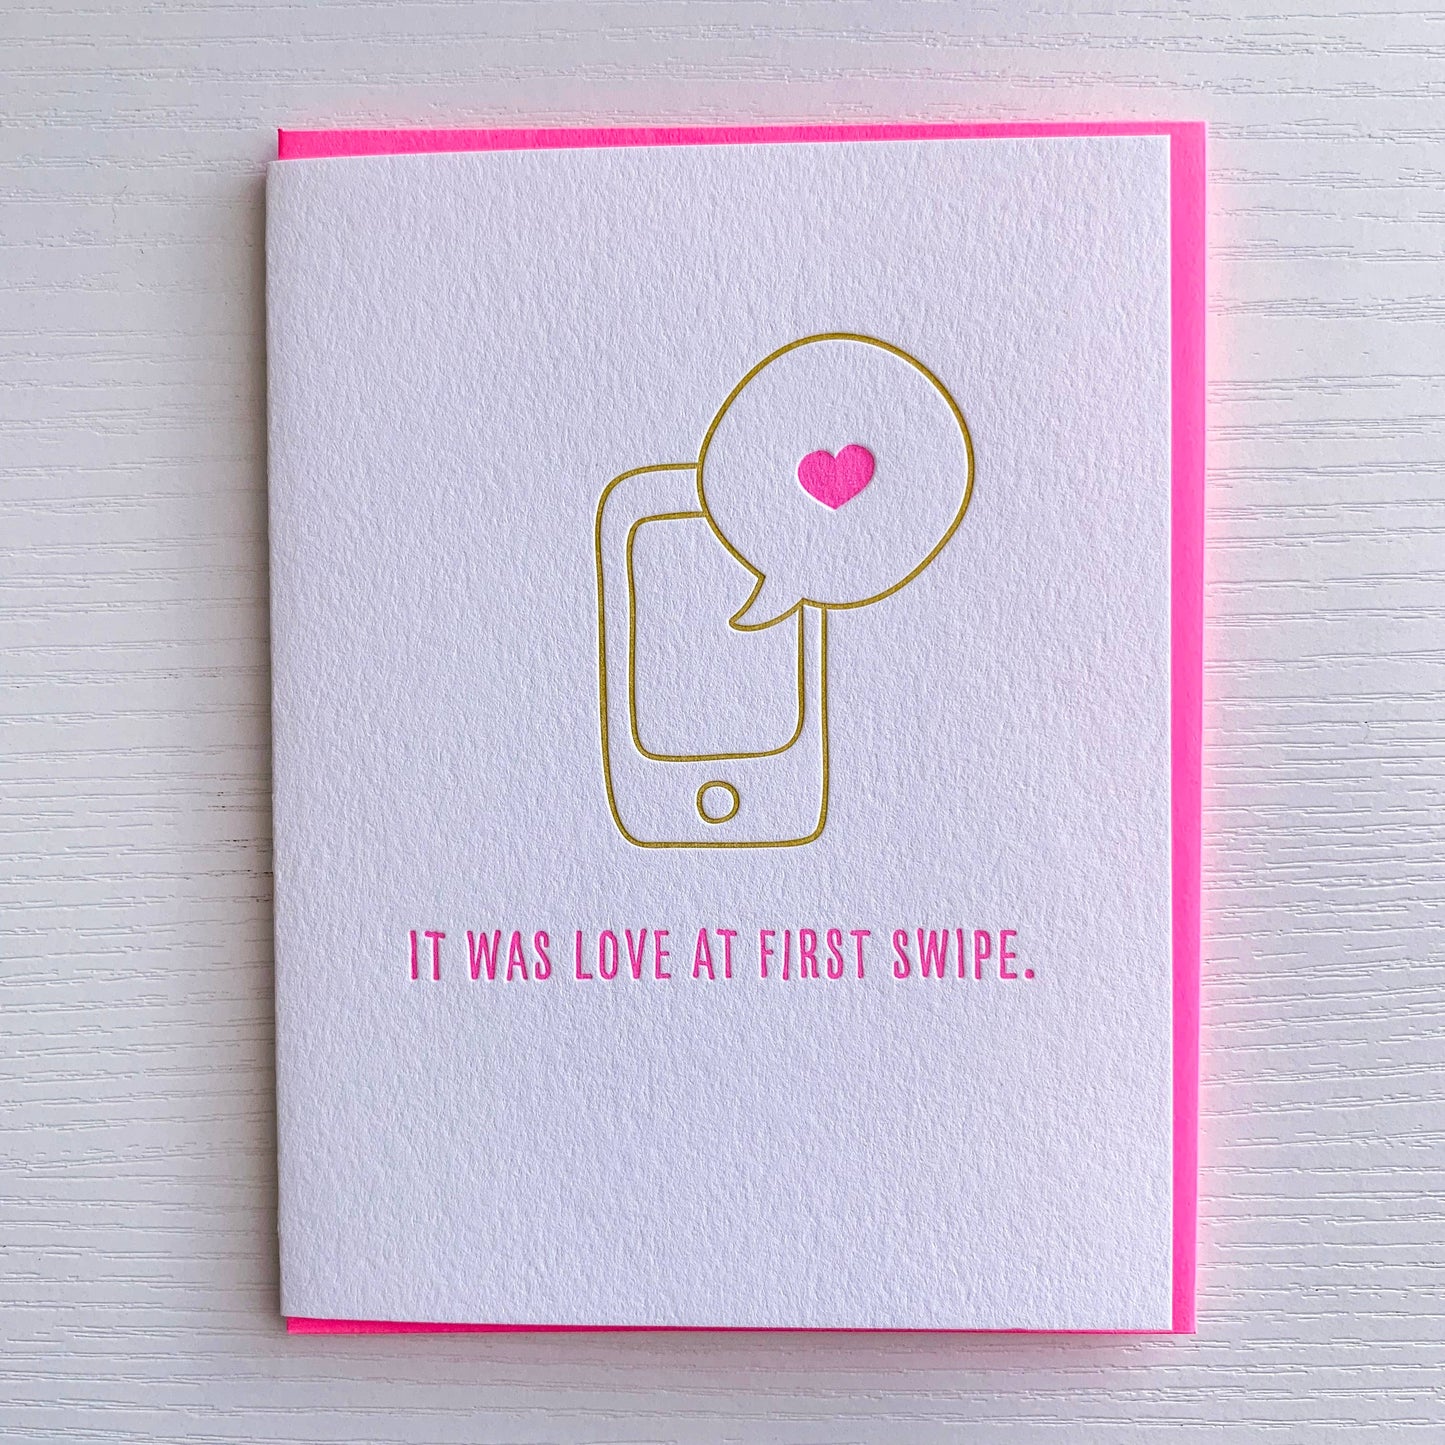 DeLuce Design - Love Card, Valentine's Day Card, Love At First Swipe